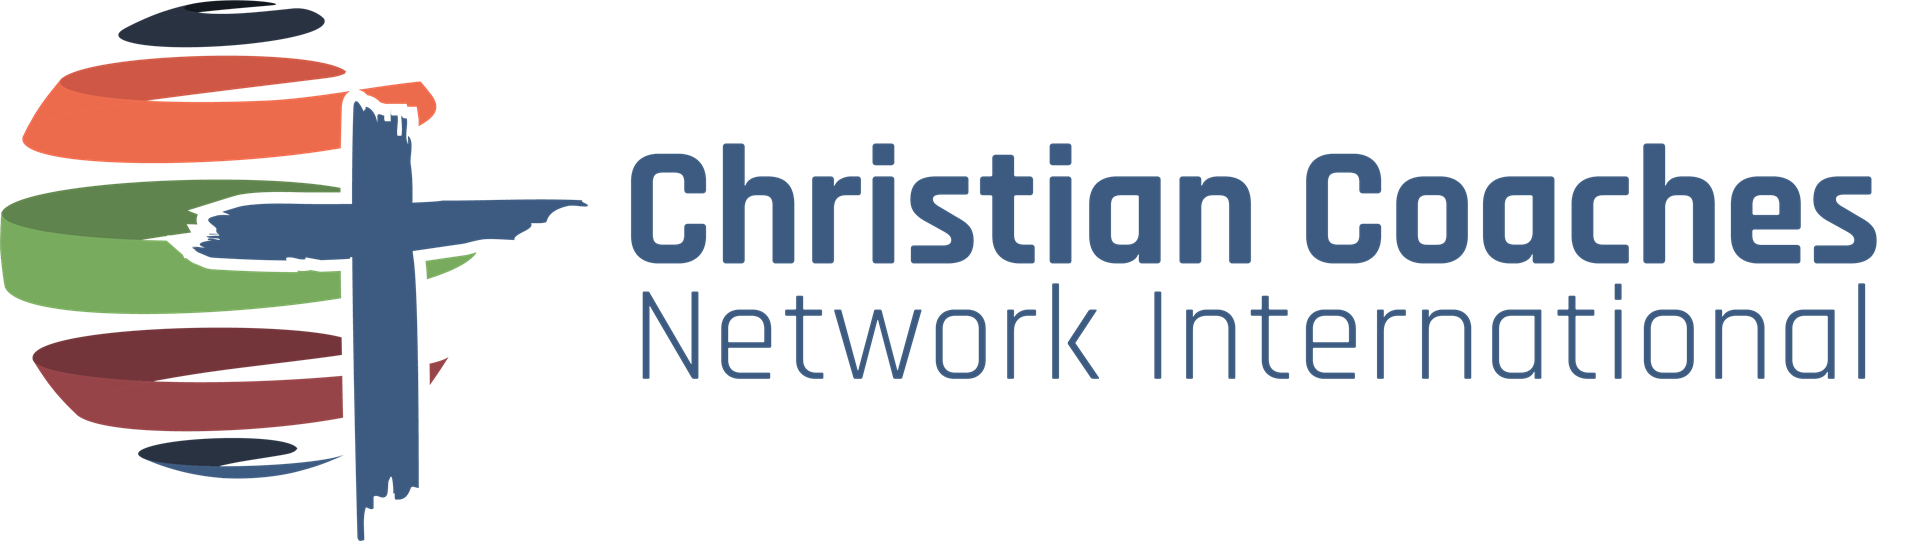 Christian Coaches Network Intl